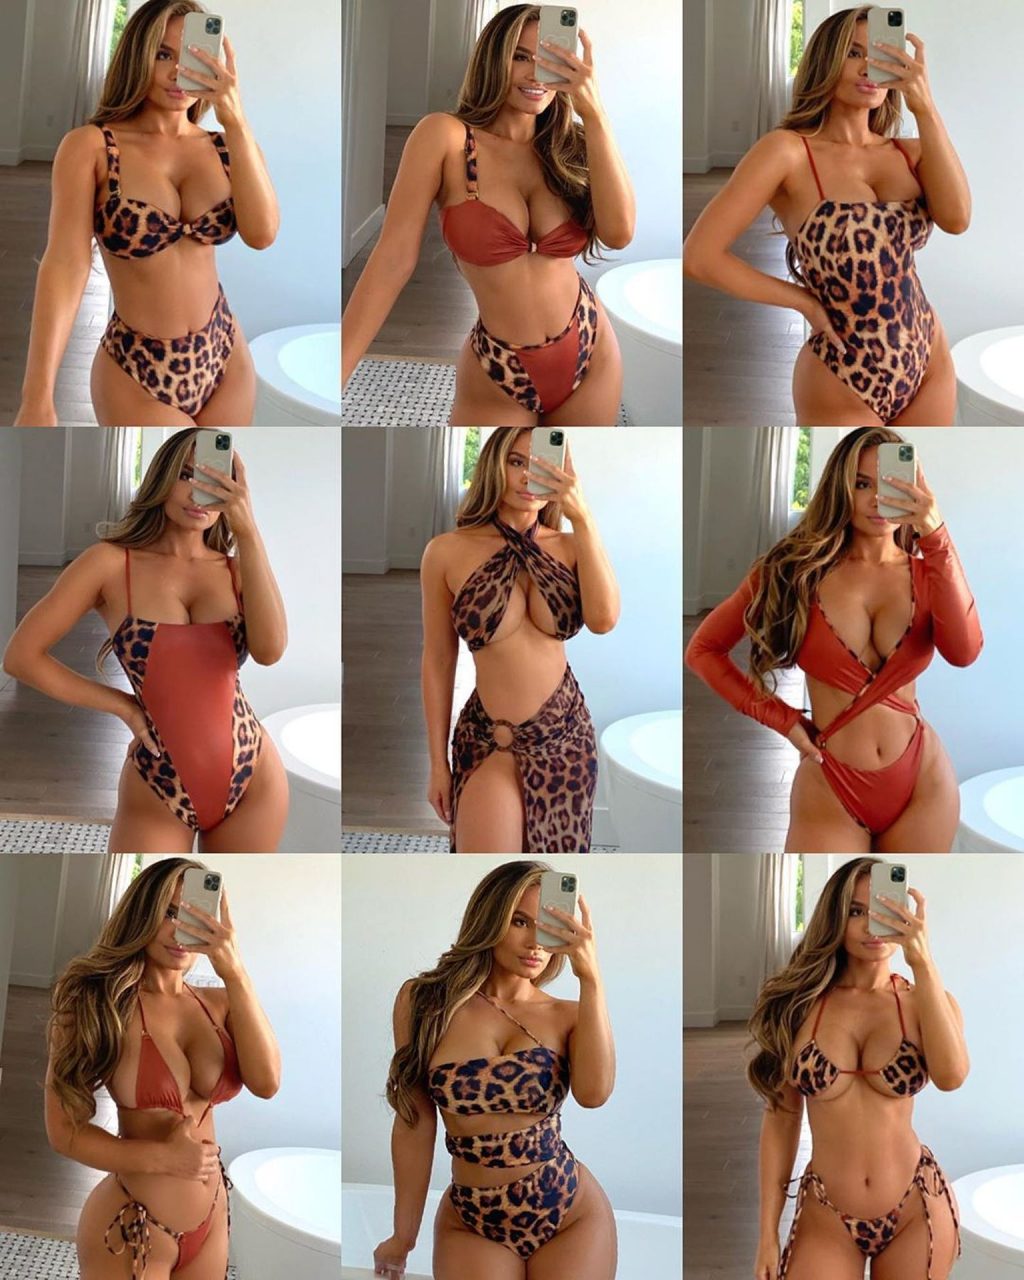 Daphne Joy Presents a New Bikini Collection (12 Photos)